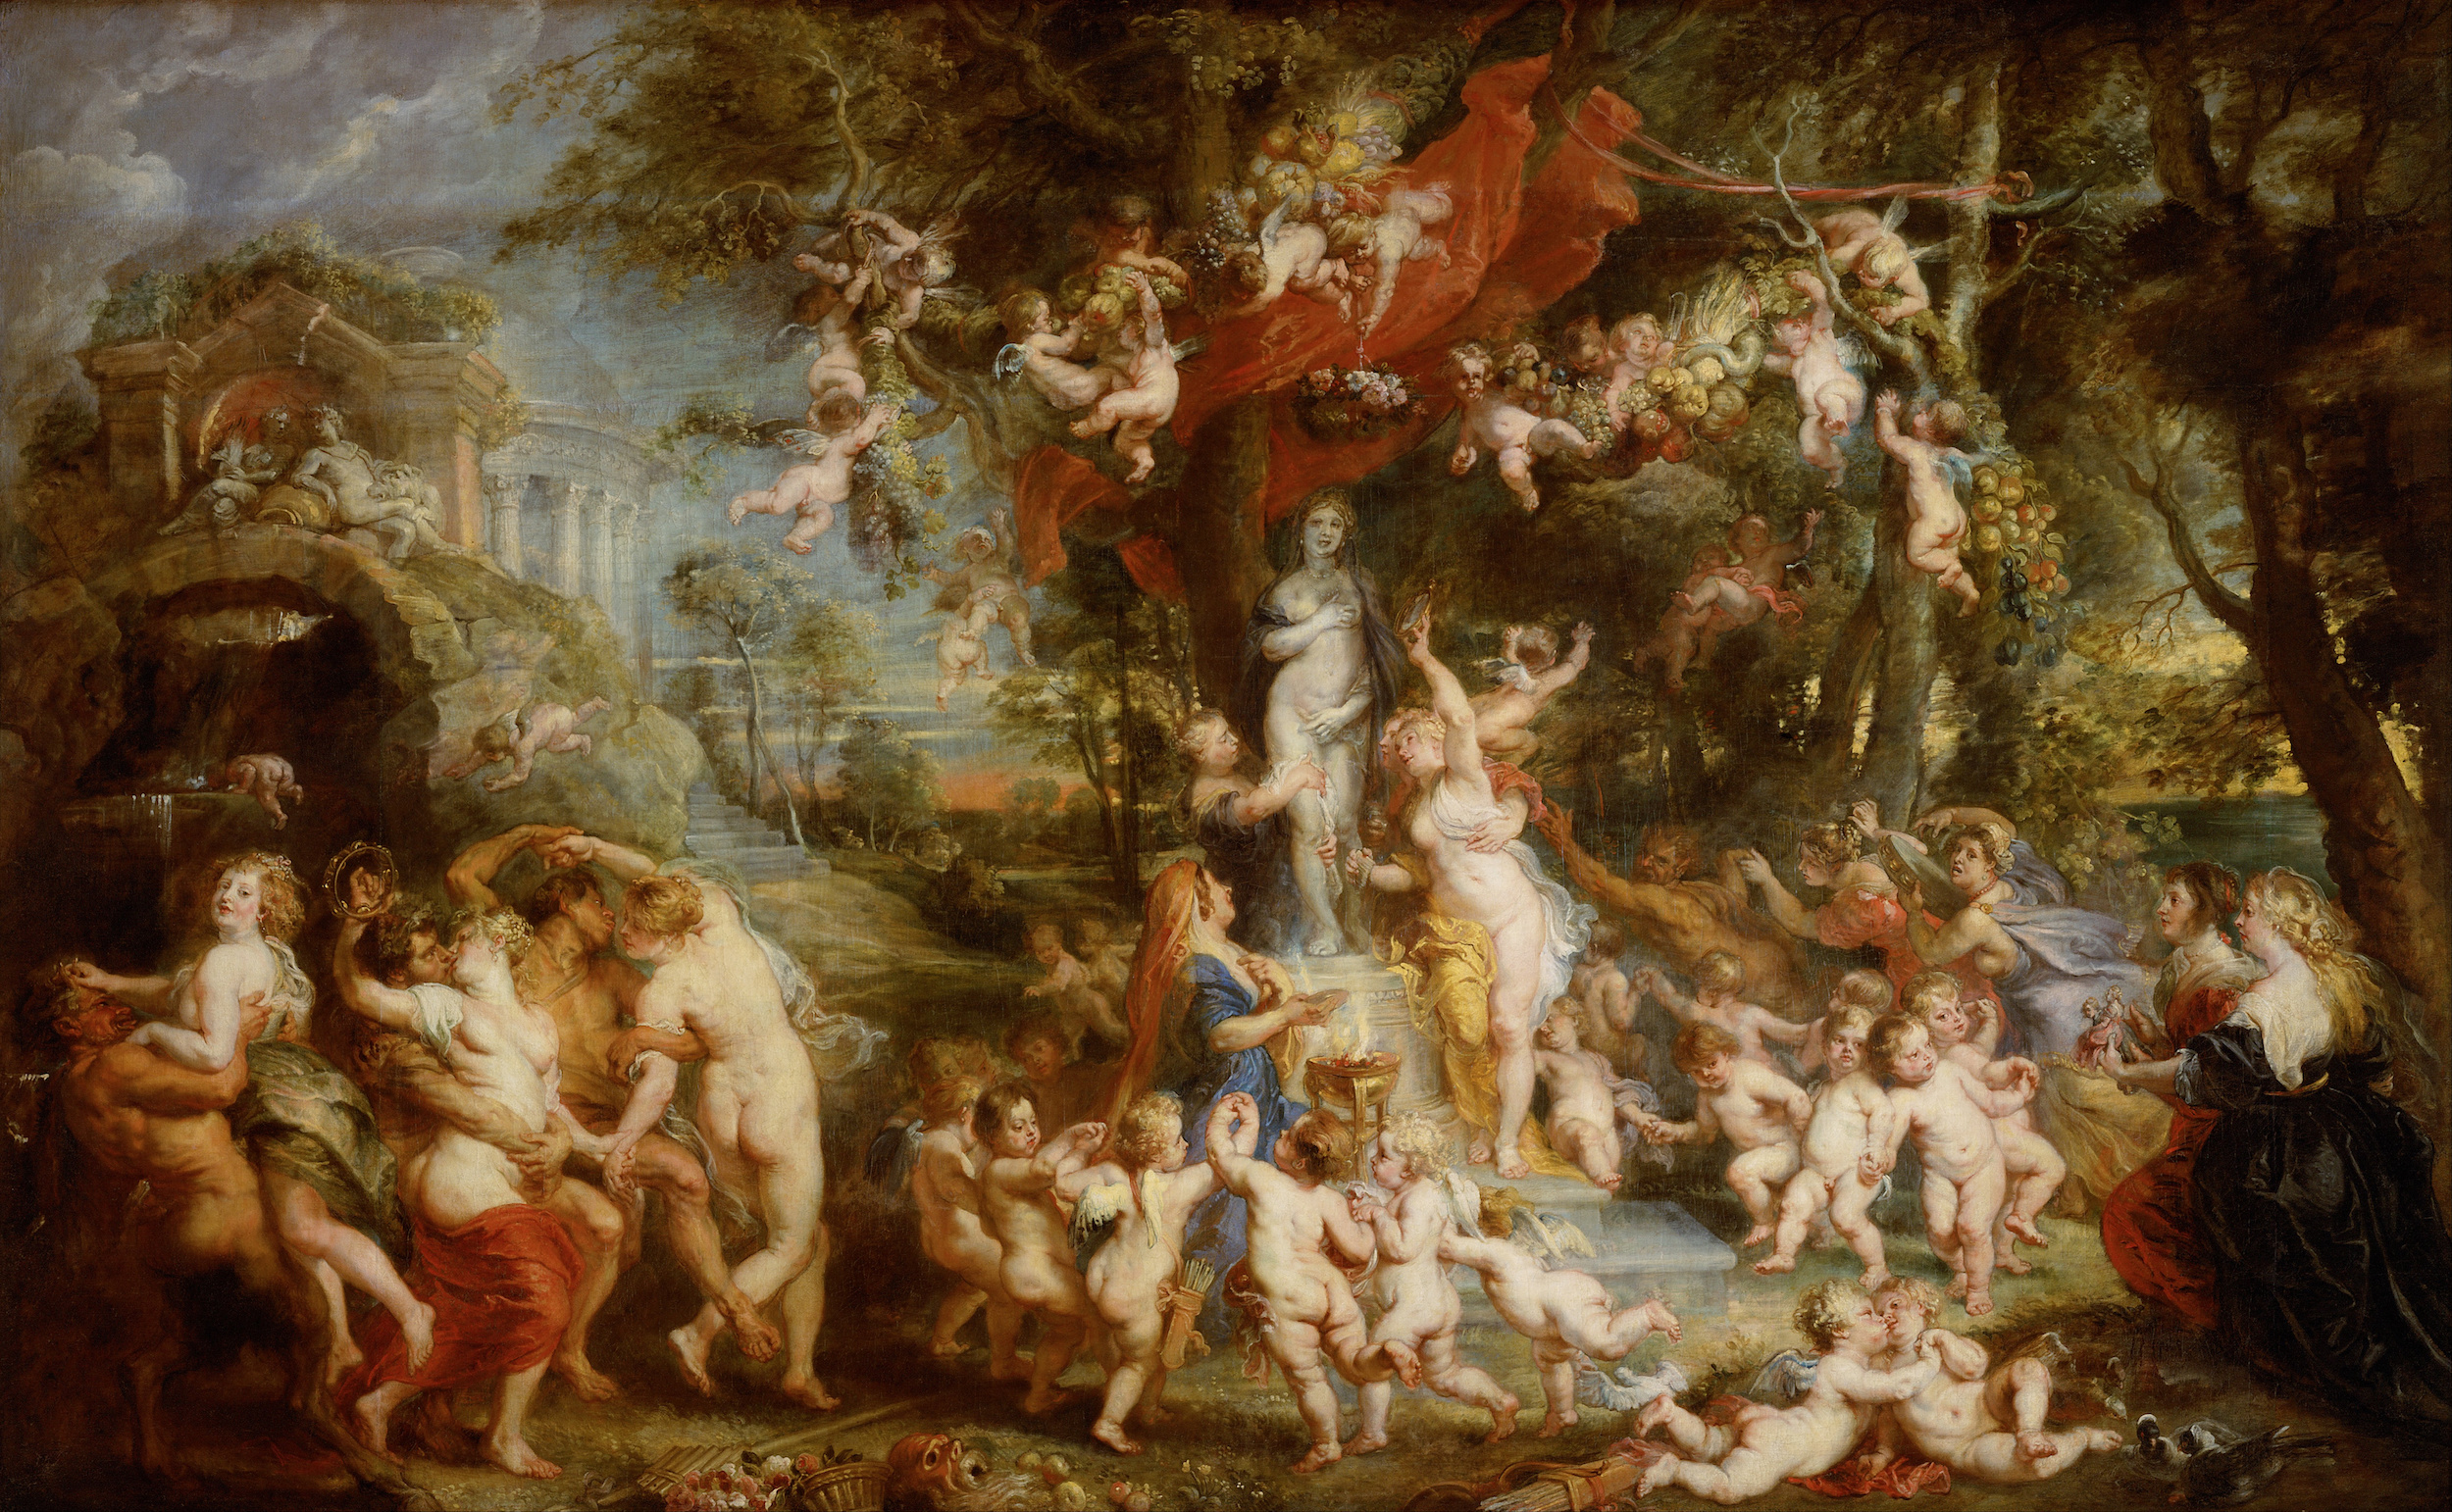 A Festa de Vénus by Peter Paul Rubens - c. 1636/37 - 350 x 217 cm Kunsthistorisches Museum